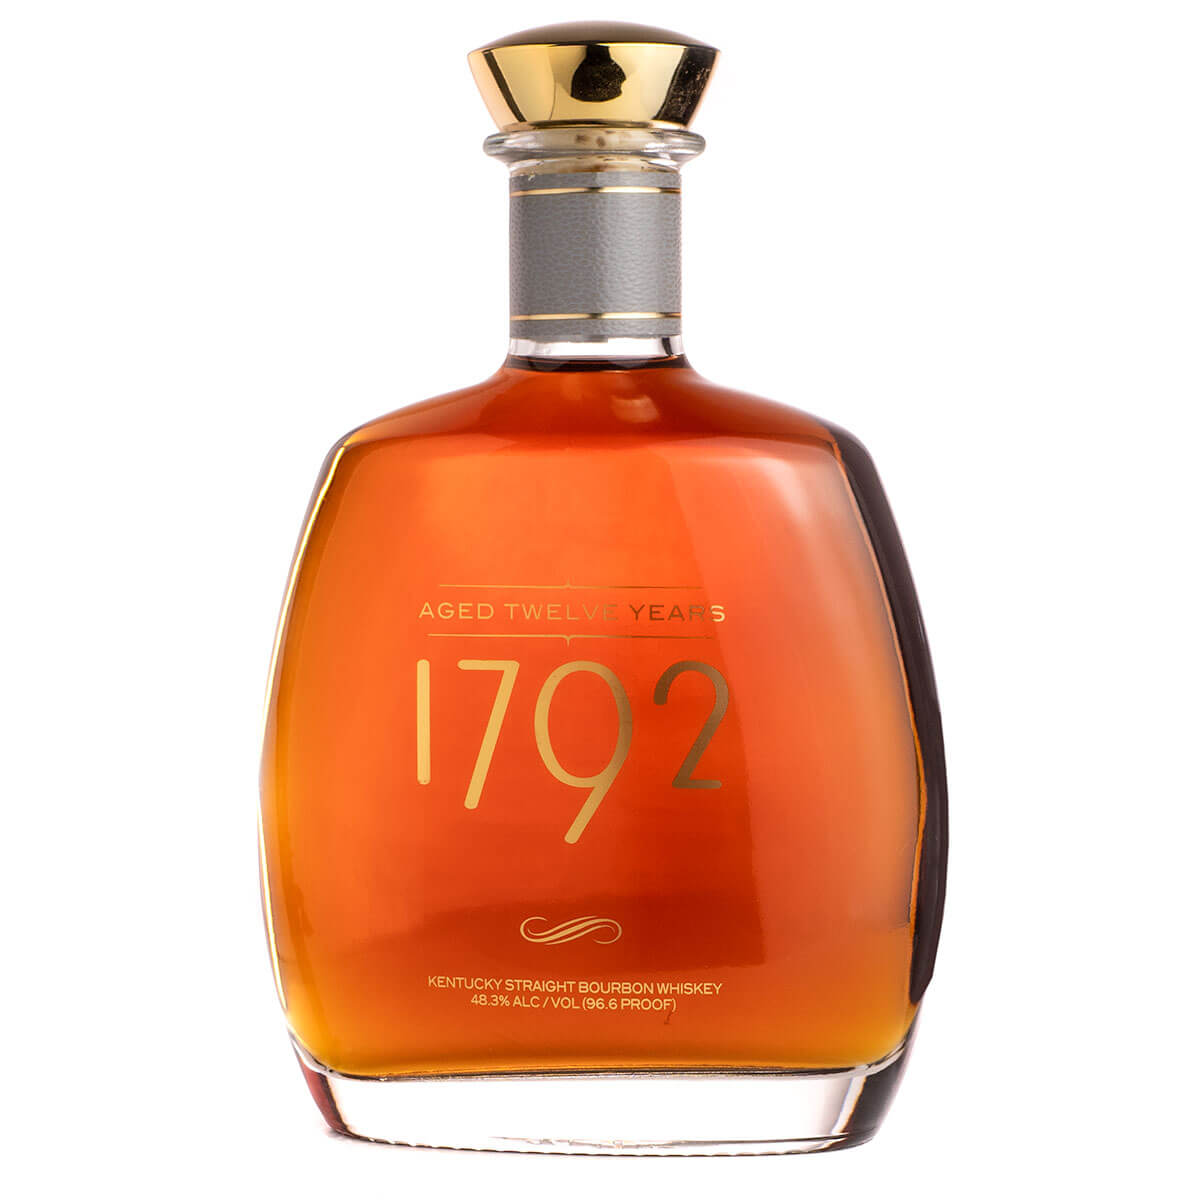 1792 Bourbon Aged Twelve Years bottle